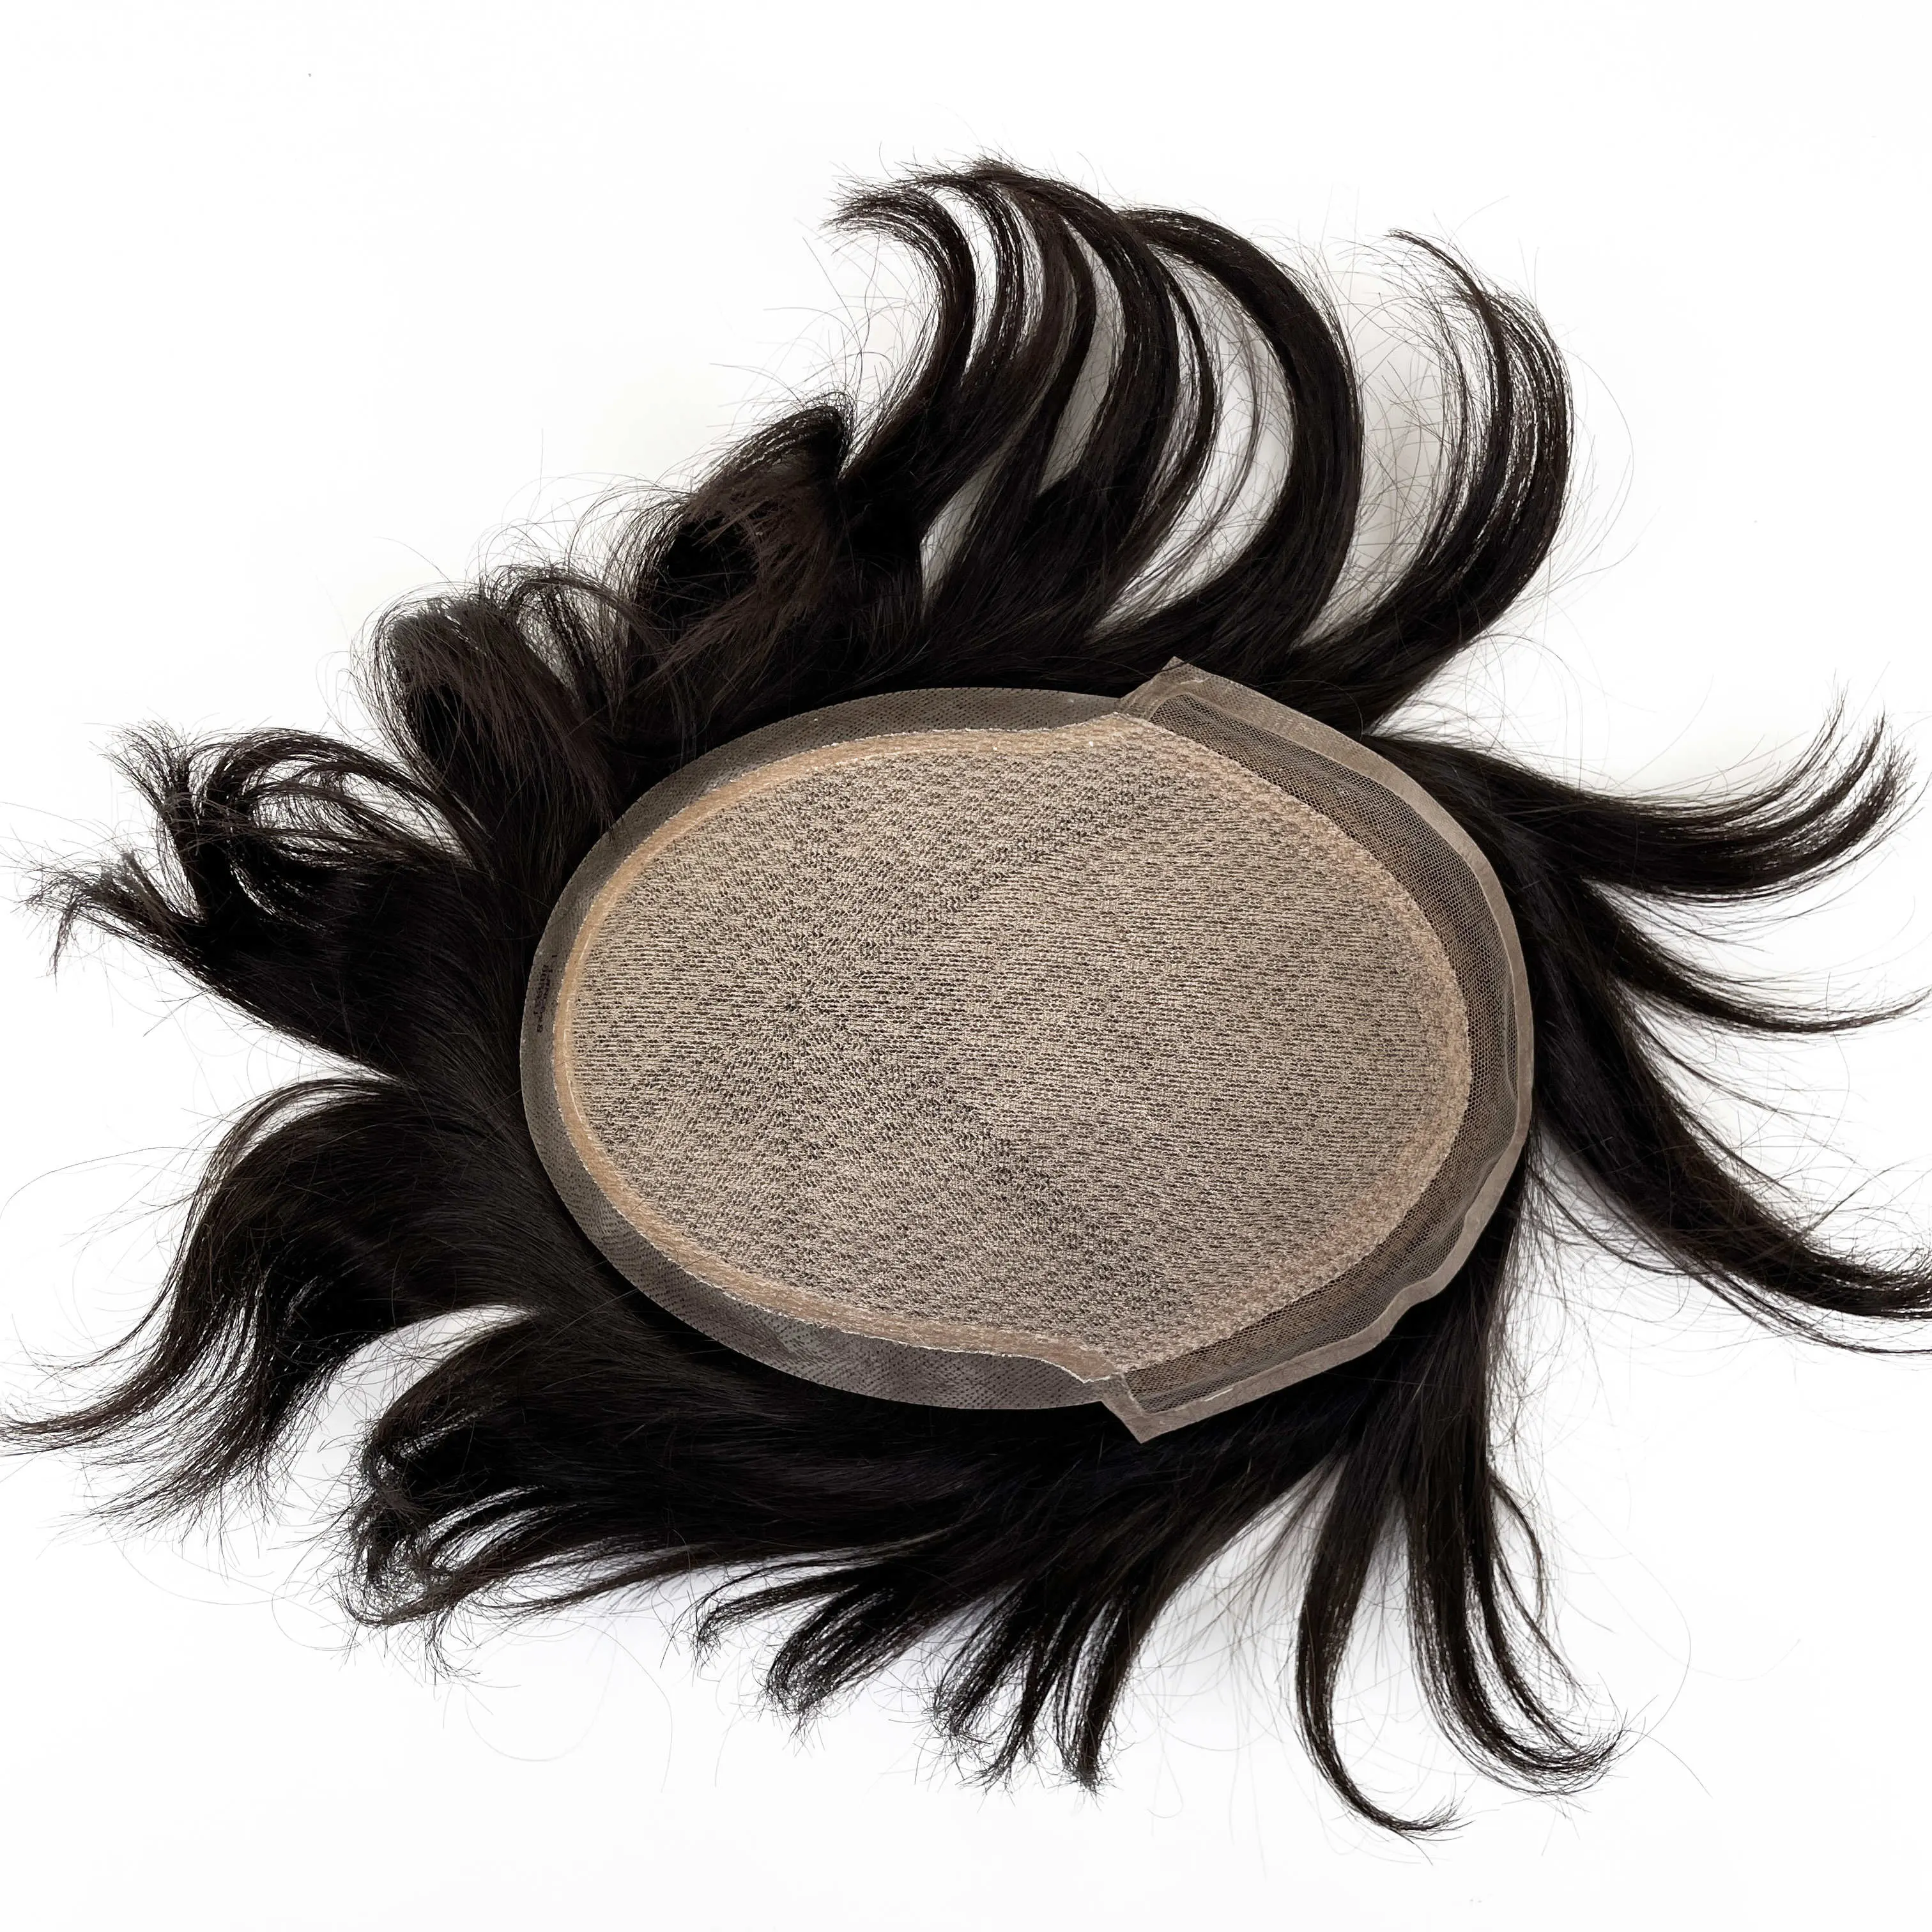 Wholesale Price Men's Human Wigs Real Men's Top Hair Block Toupee Woven Hair Replacement Piece Export